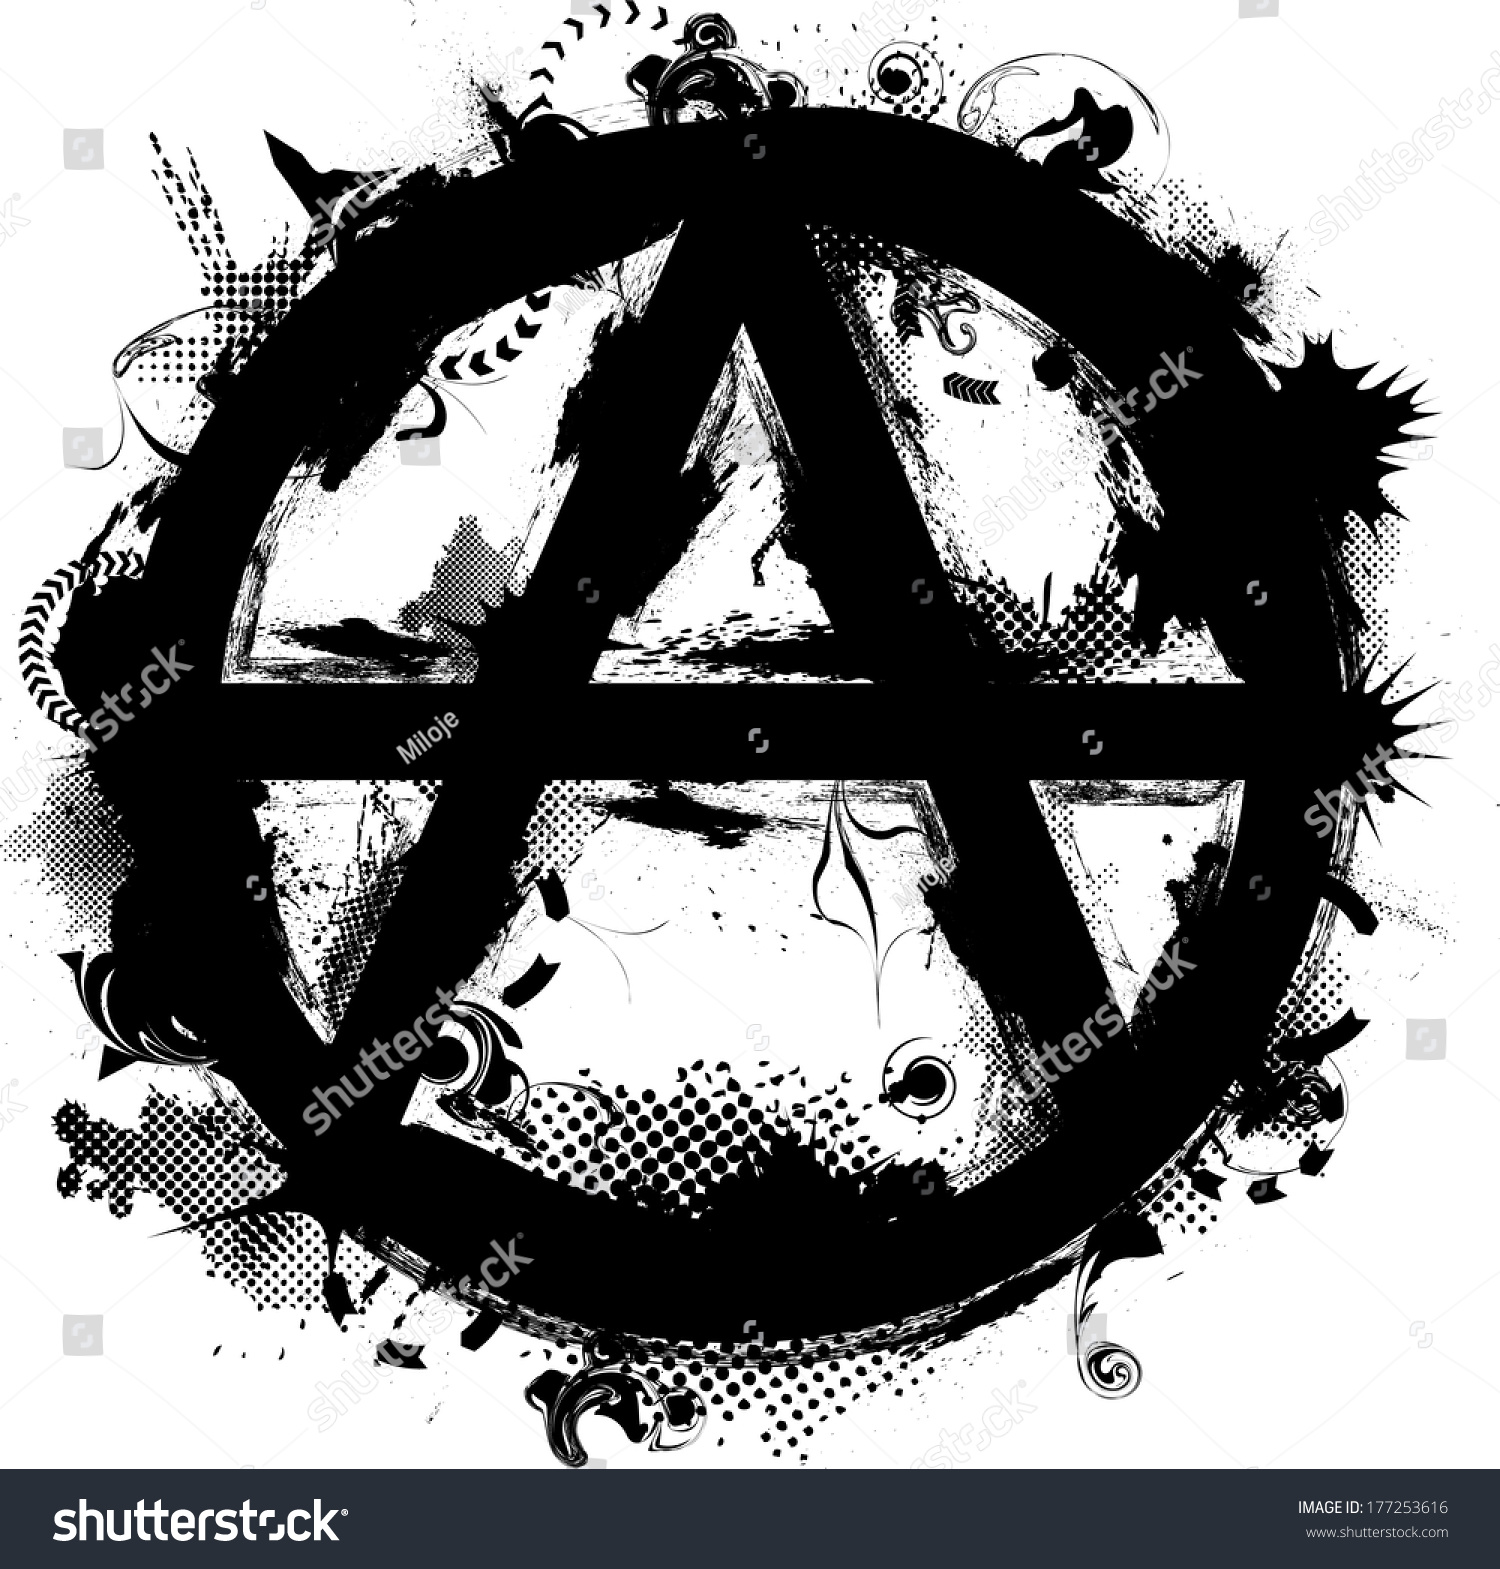 Символ анархии эскиз